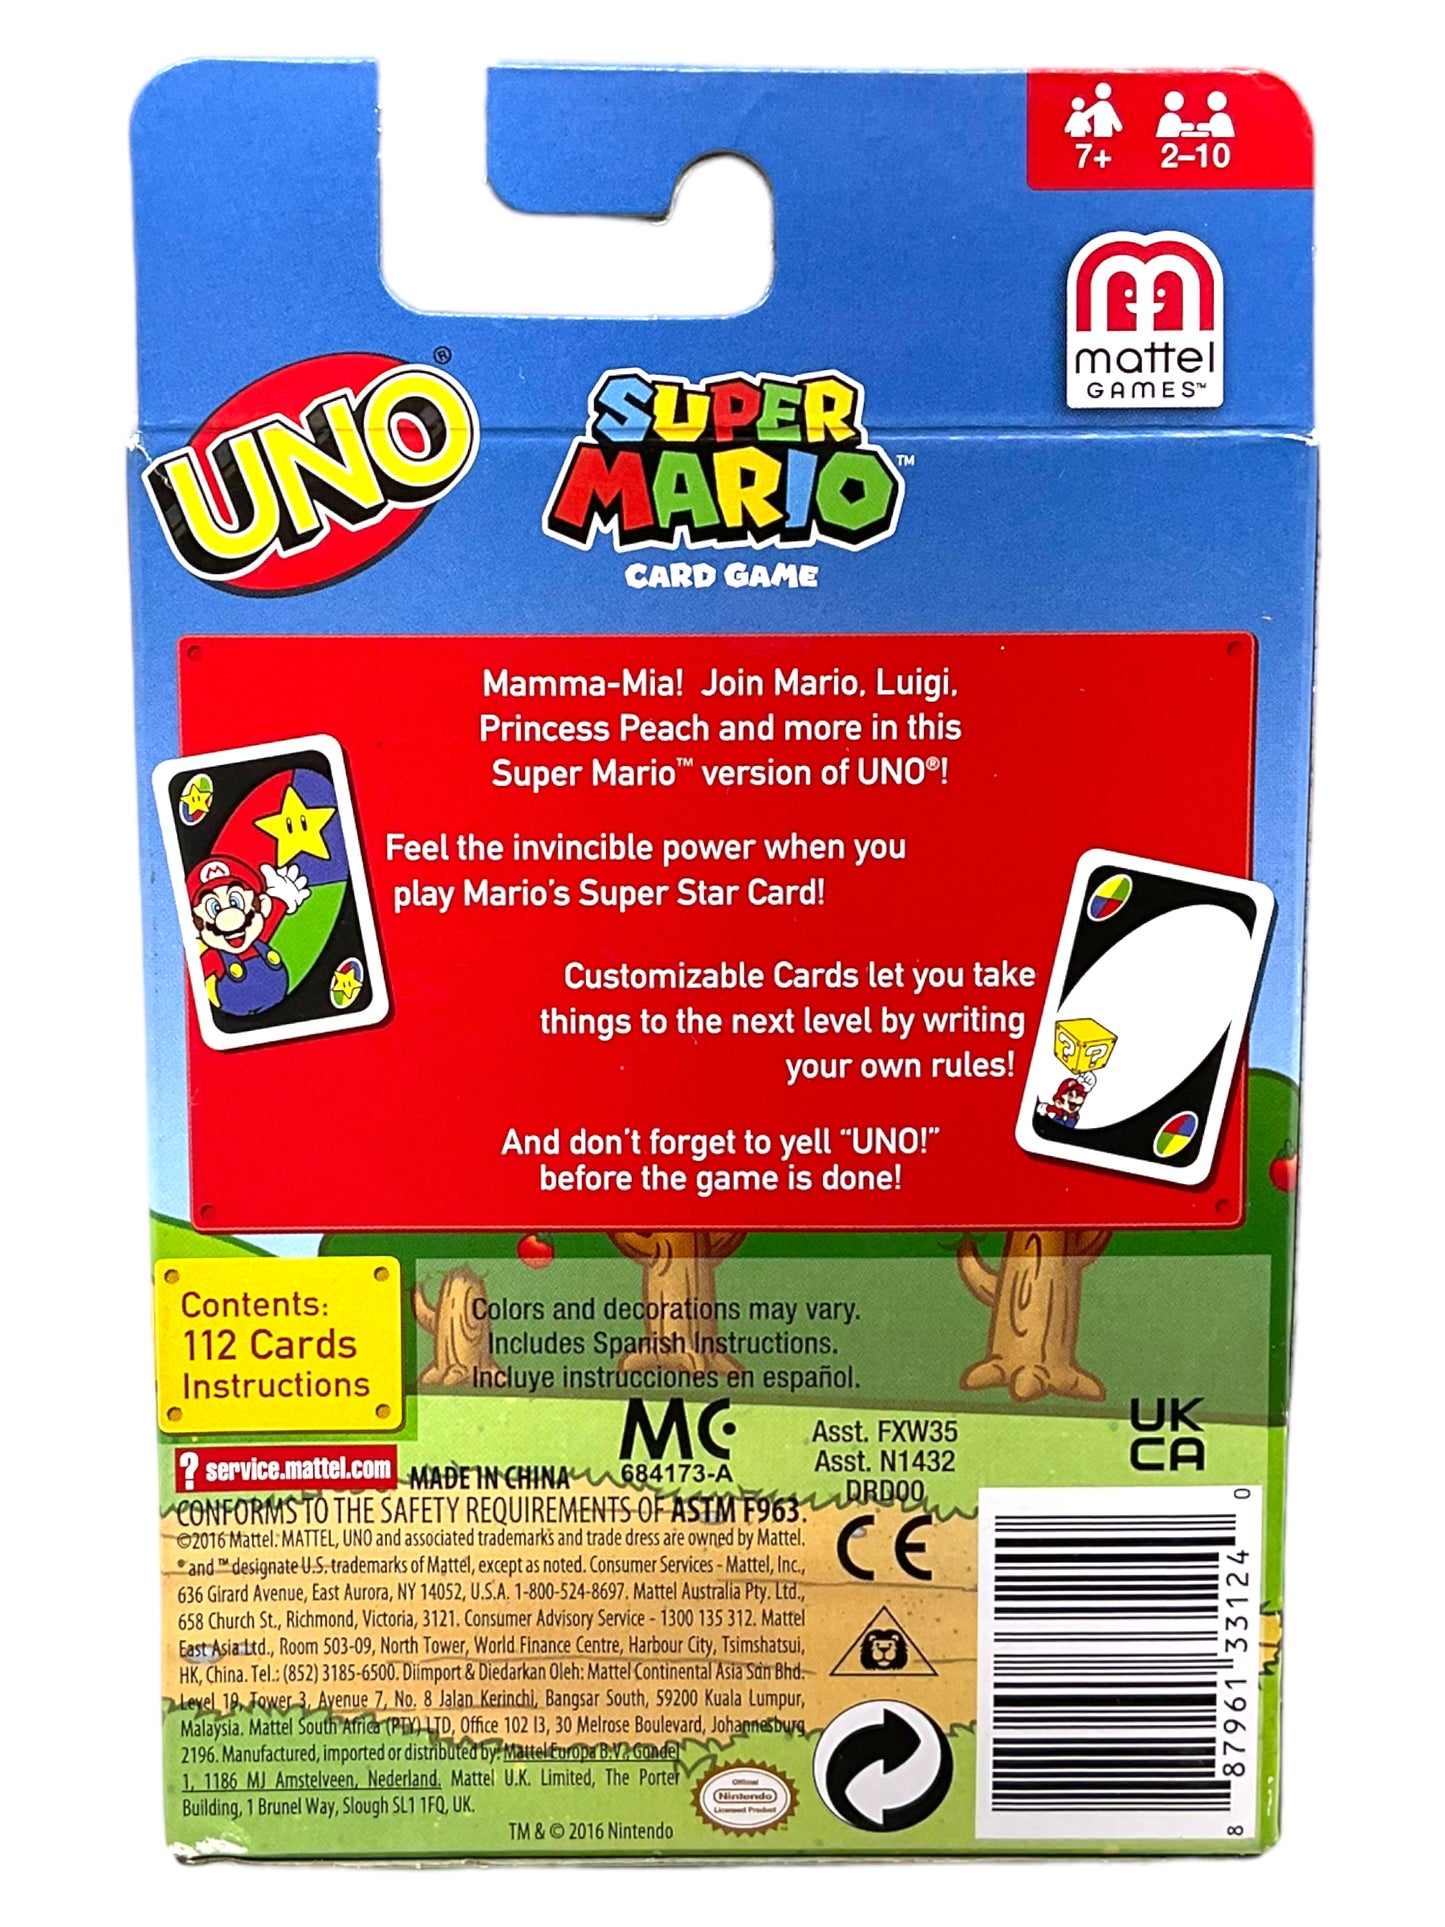 Super Mario Card Game